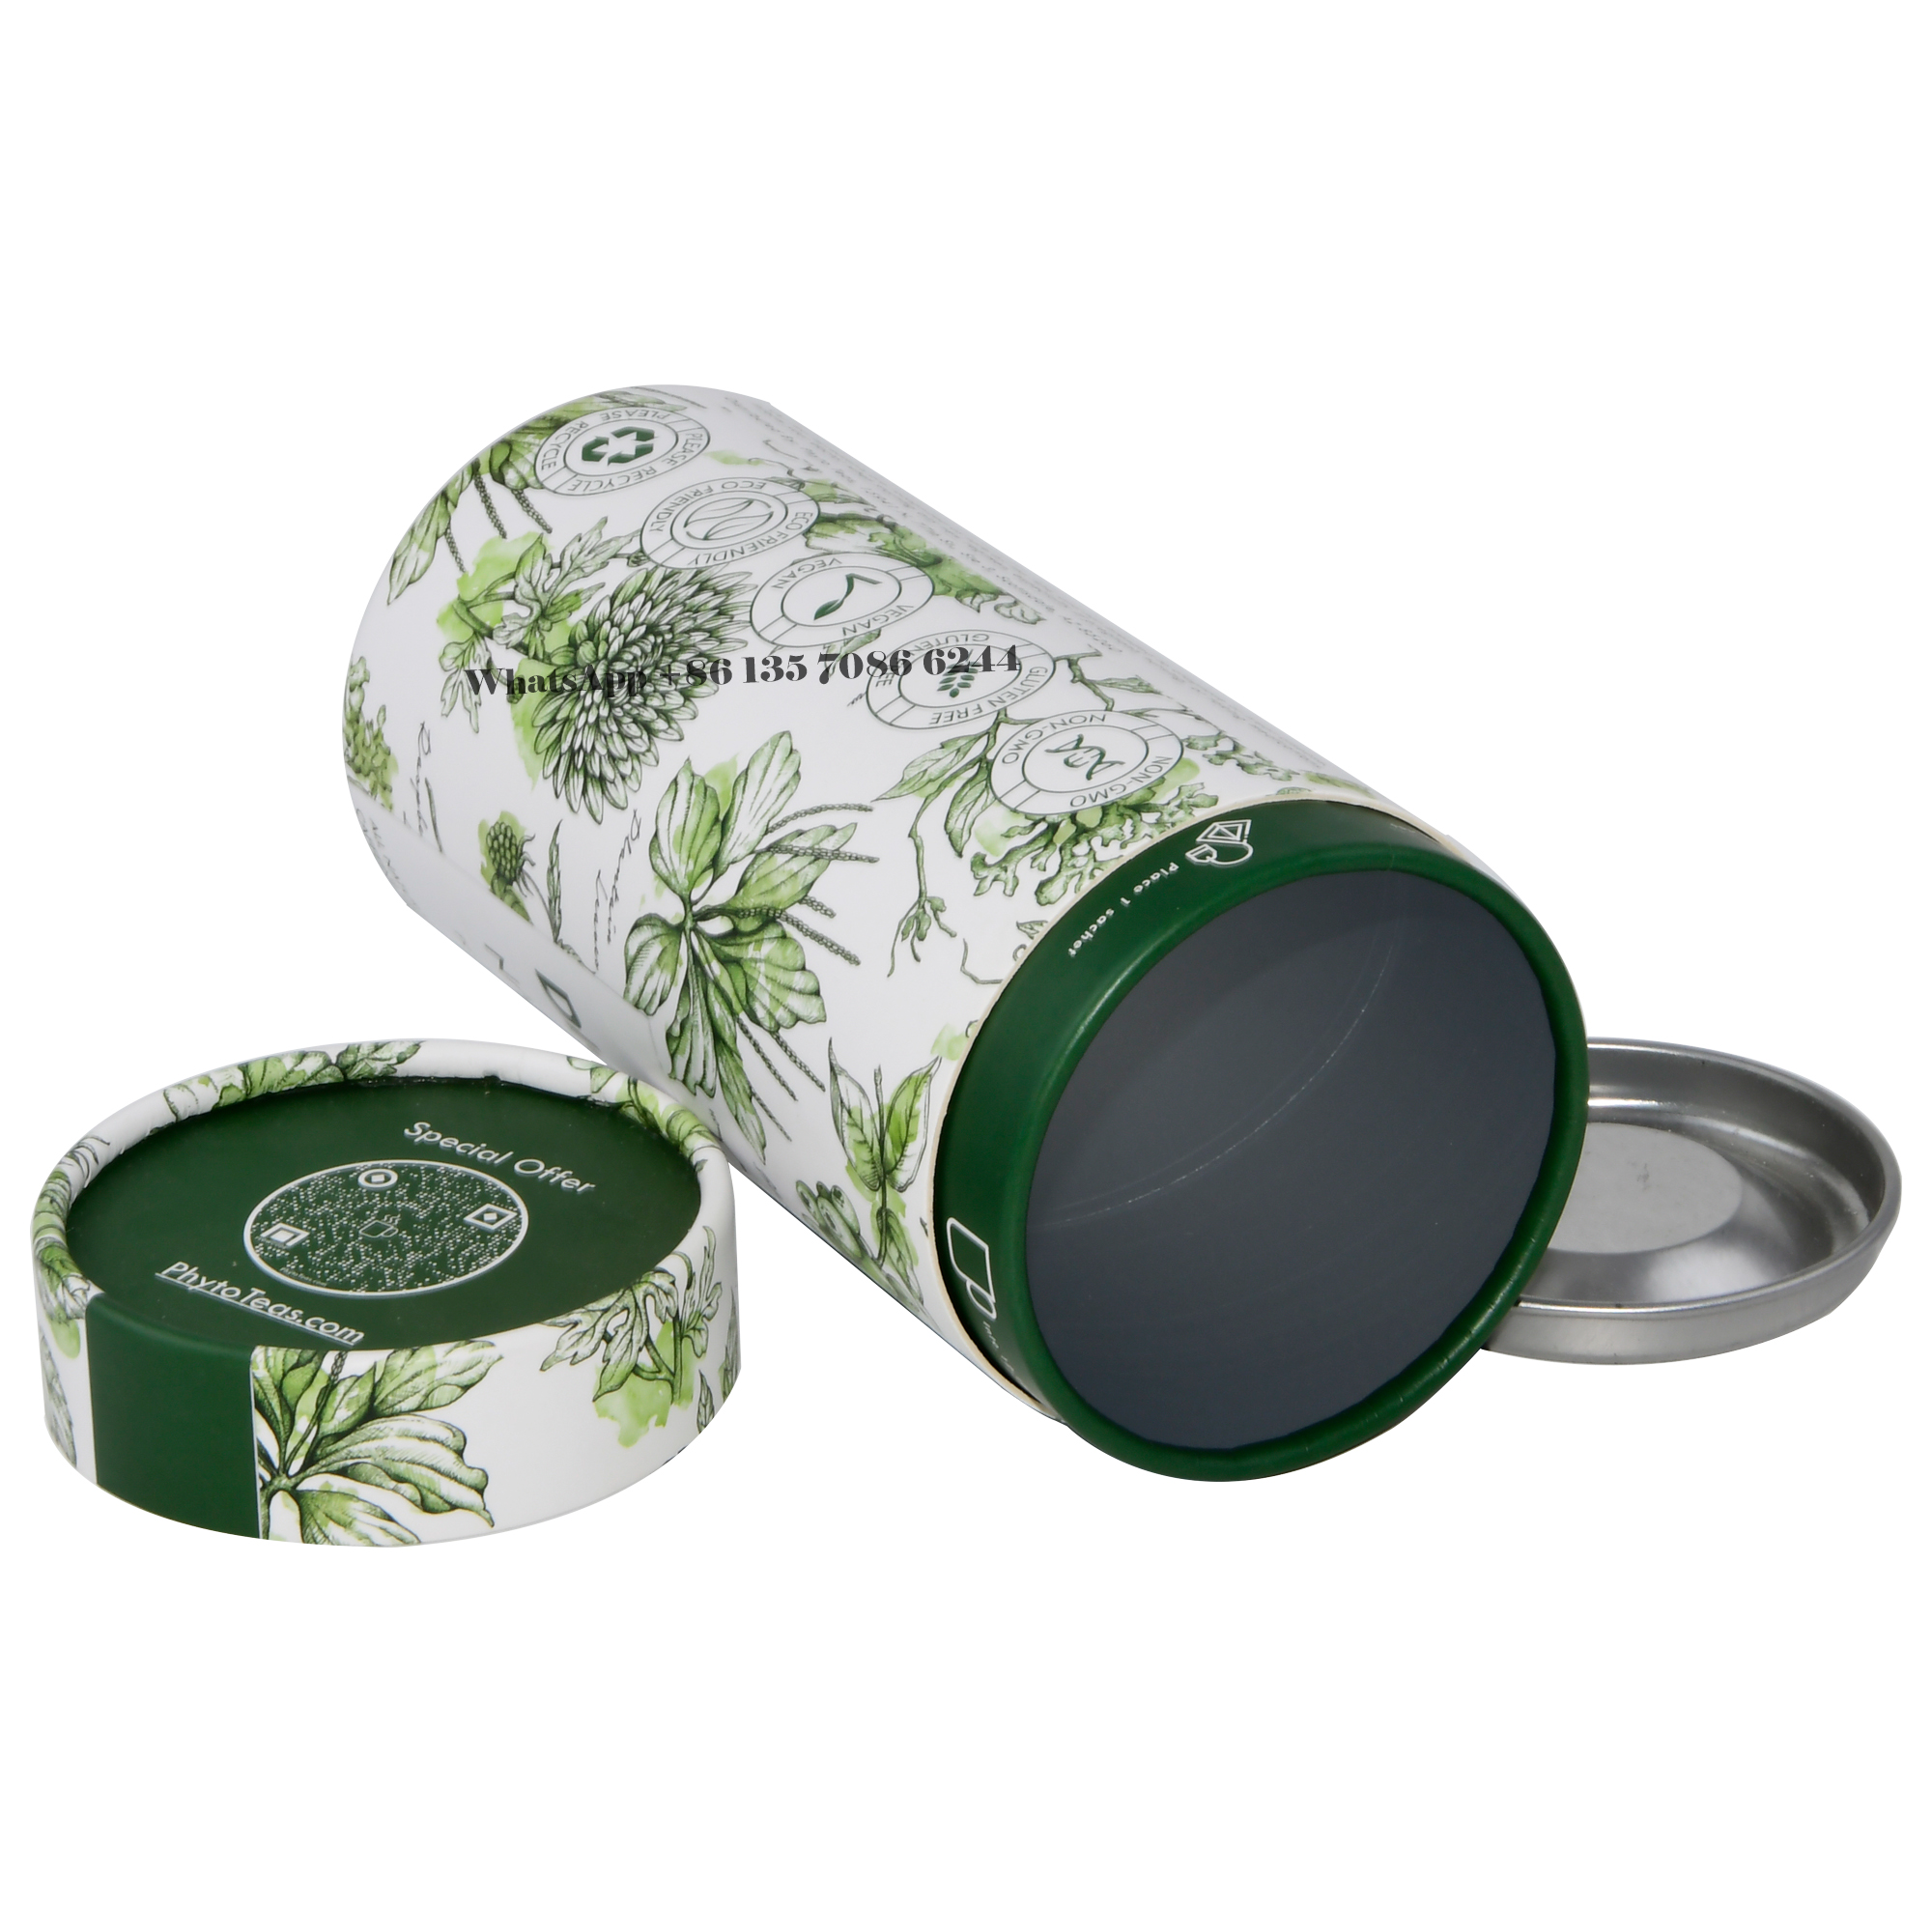  Confezione rotonda di tubi di carta per un tè in miscela elegante  